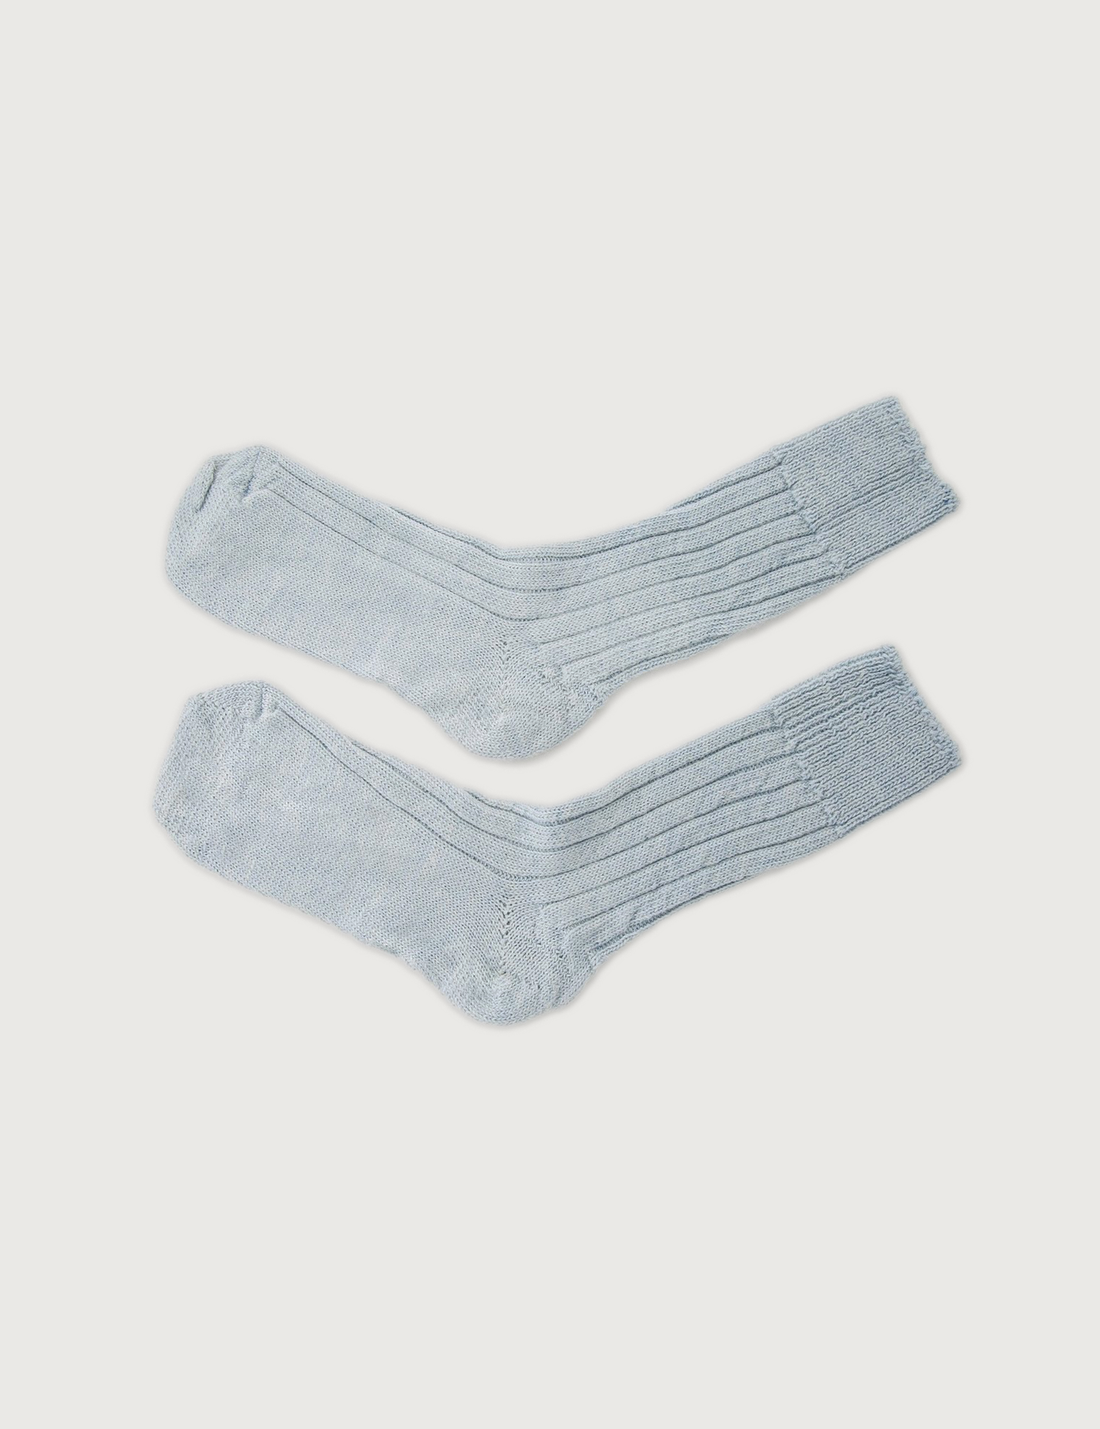 Alpaca Bed Socks · powder blue